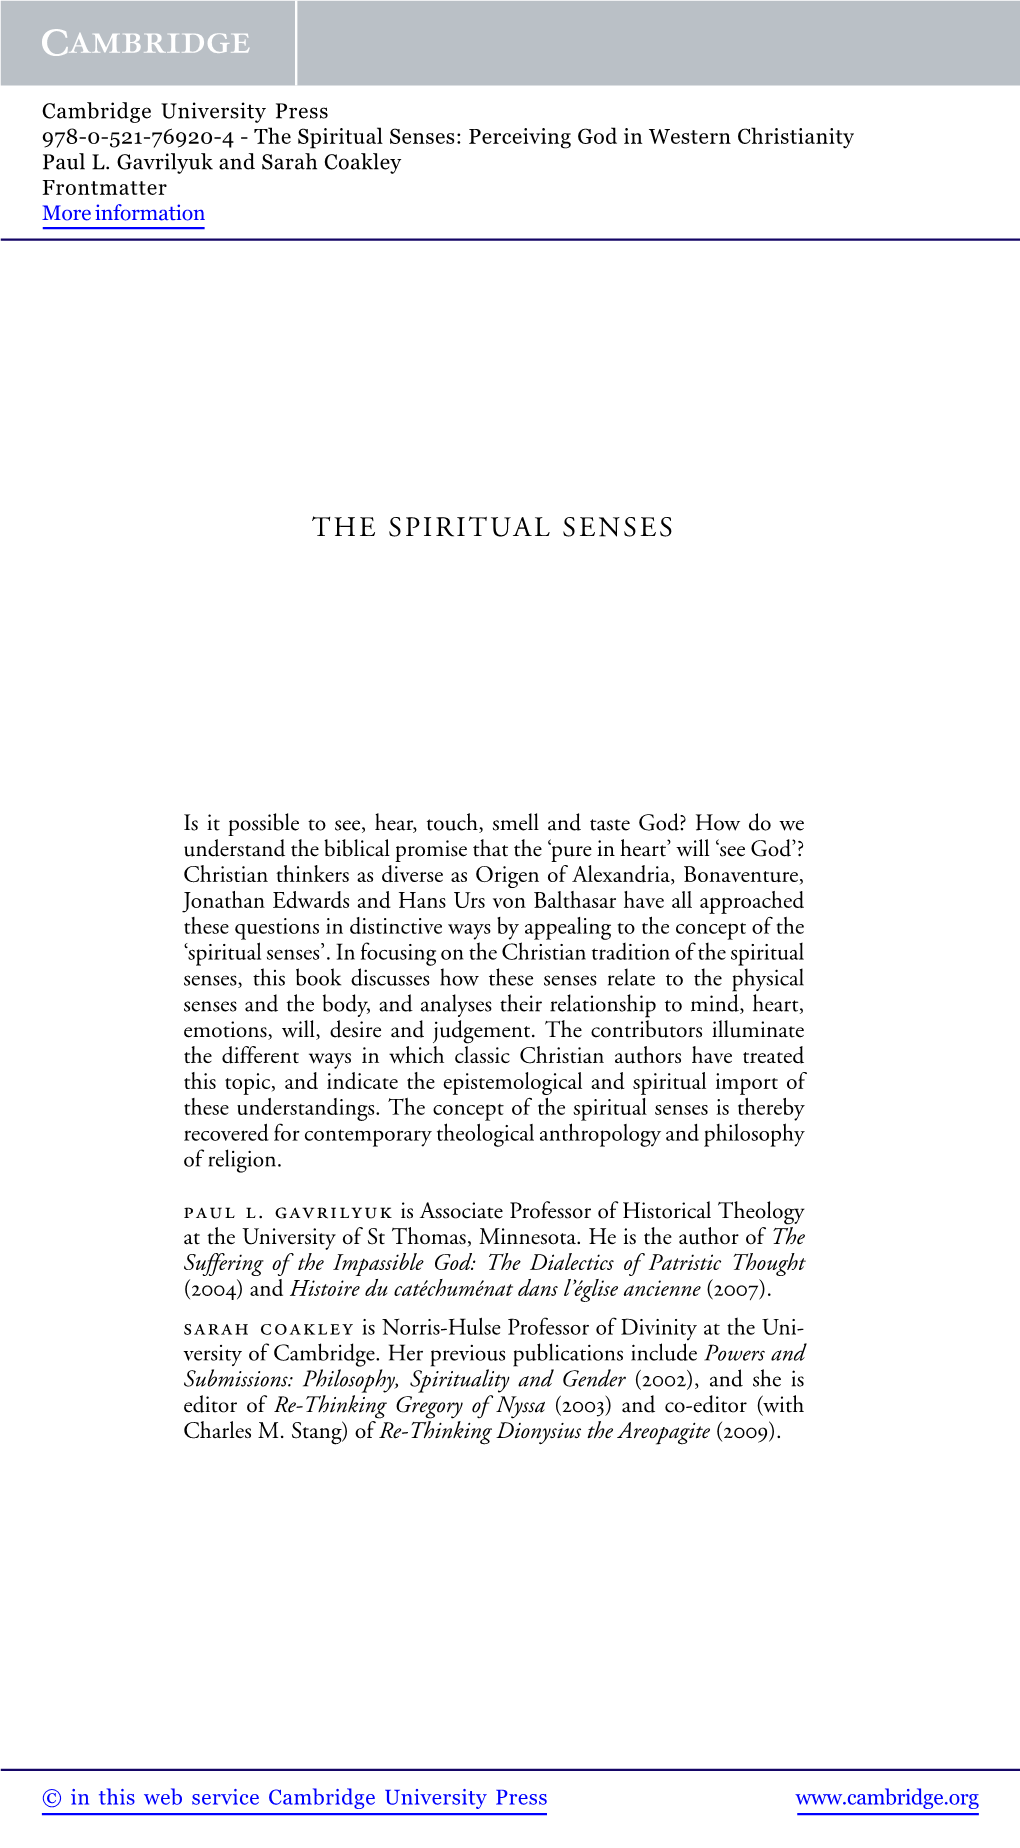 The Spiritual Senses: Perceiving God in Western Christianity Paul L